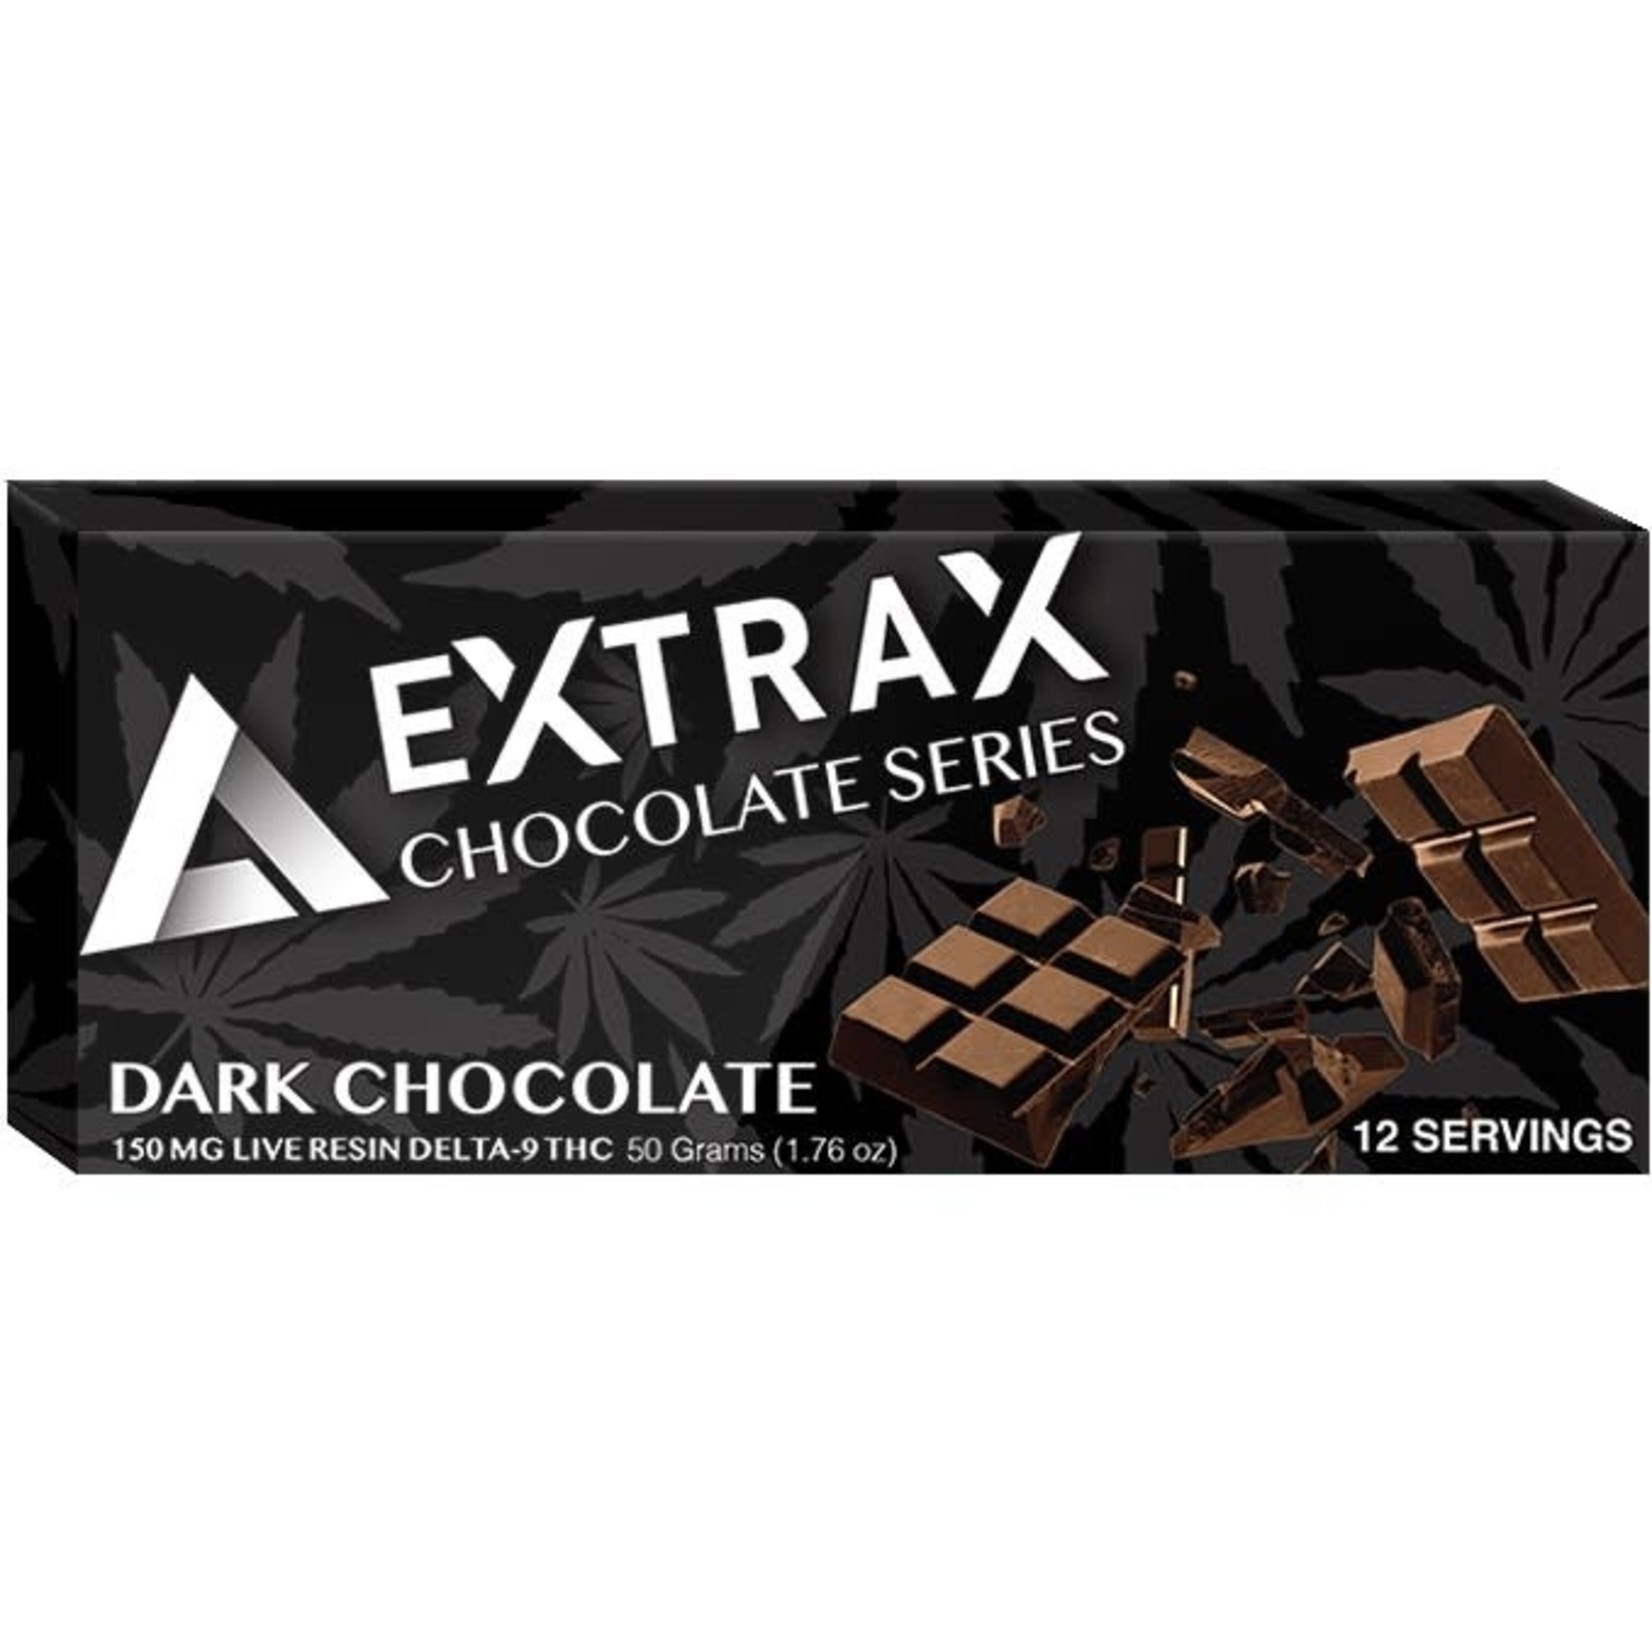 Delta Extrax Delta Extrax 150mg Live Resin Delta 9 Chocolate Bar - Dark Chocolate